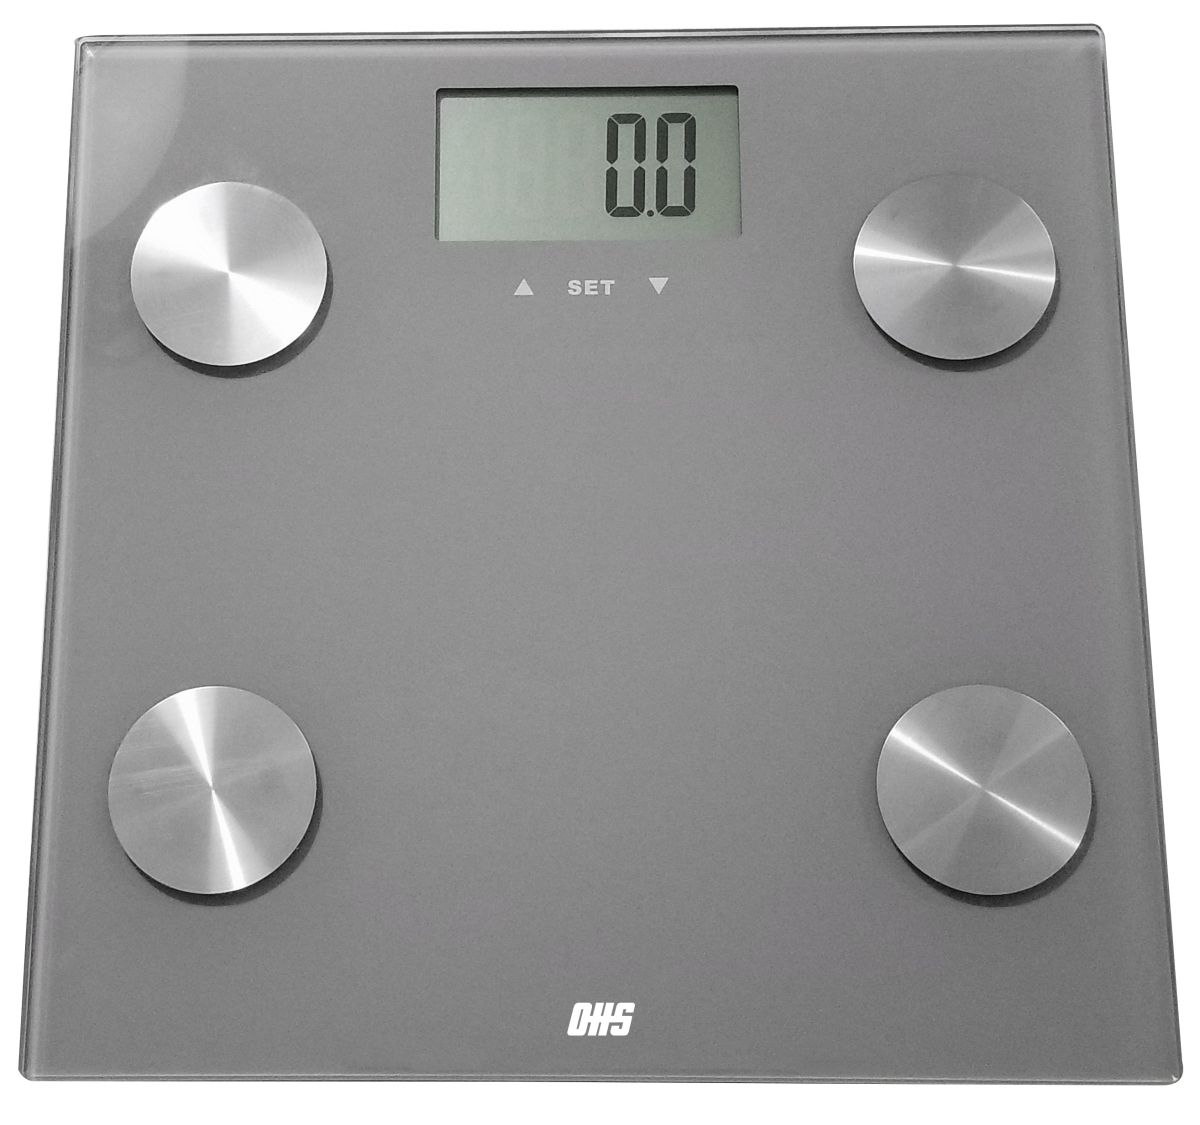 Optima Home Scales Fi-400 Figure Bathroom Body Weight Scale, Grey